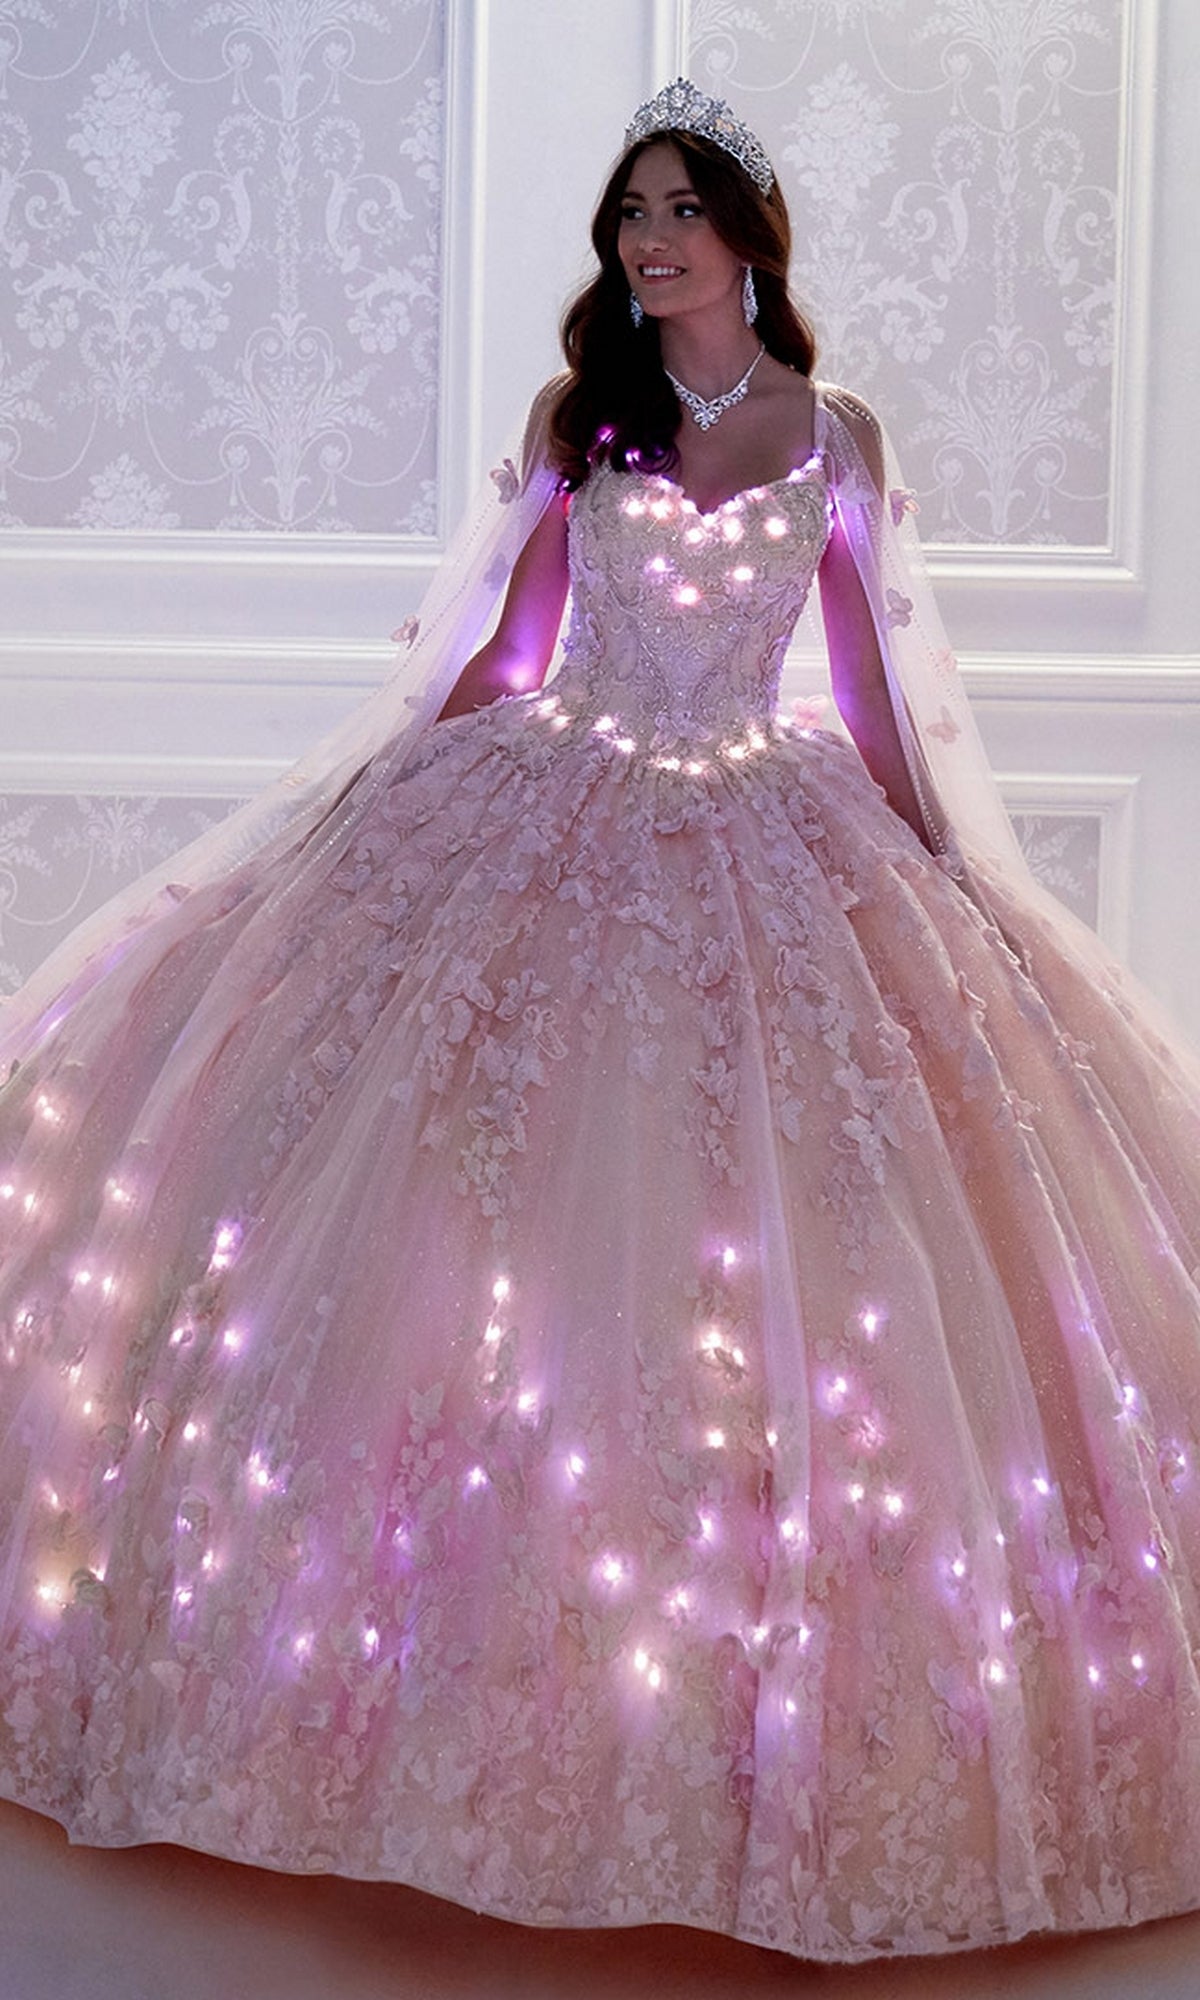 Glow-in-the-Dark Princesa Quinceañera Dress PR12261